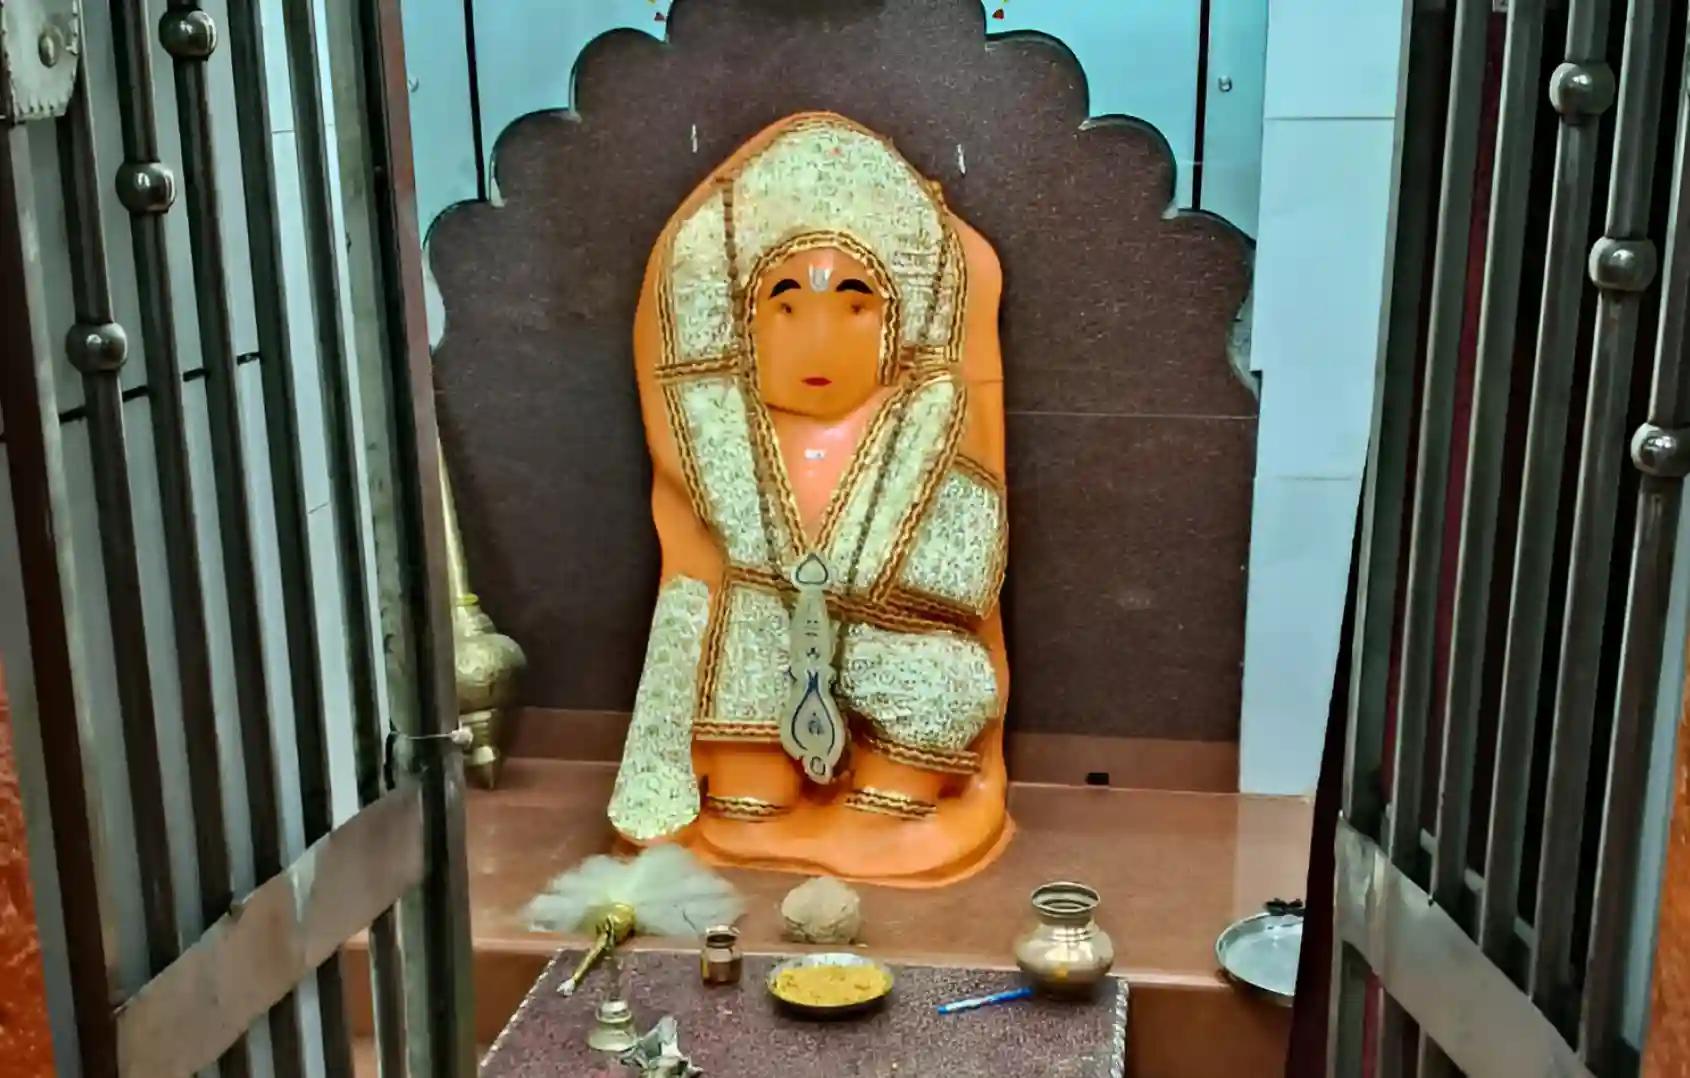 Prachin Shri Anjaniputra Neelganga Hanuman mandir,Ujjain, Madhya Pradesh